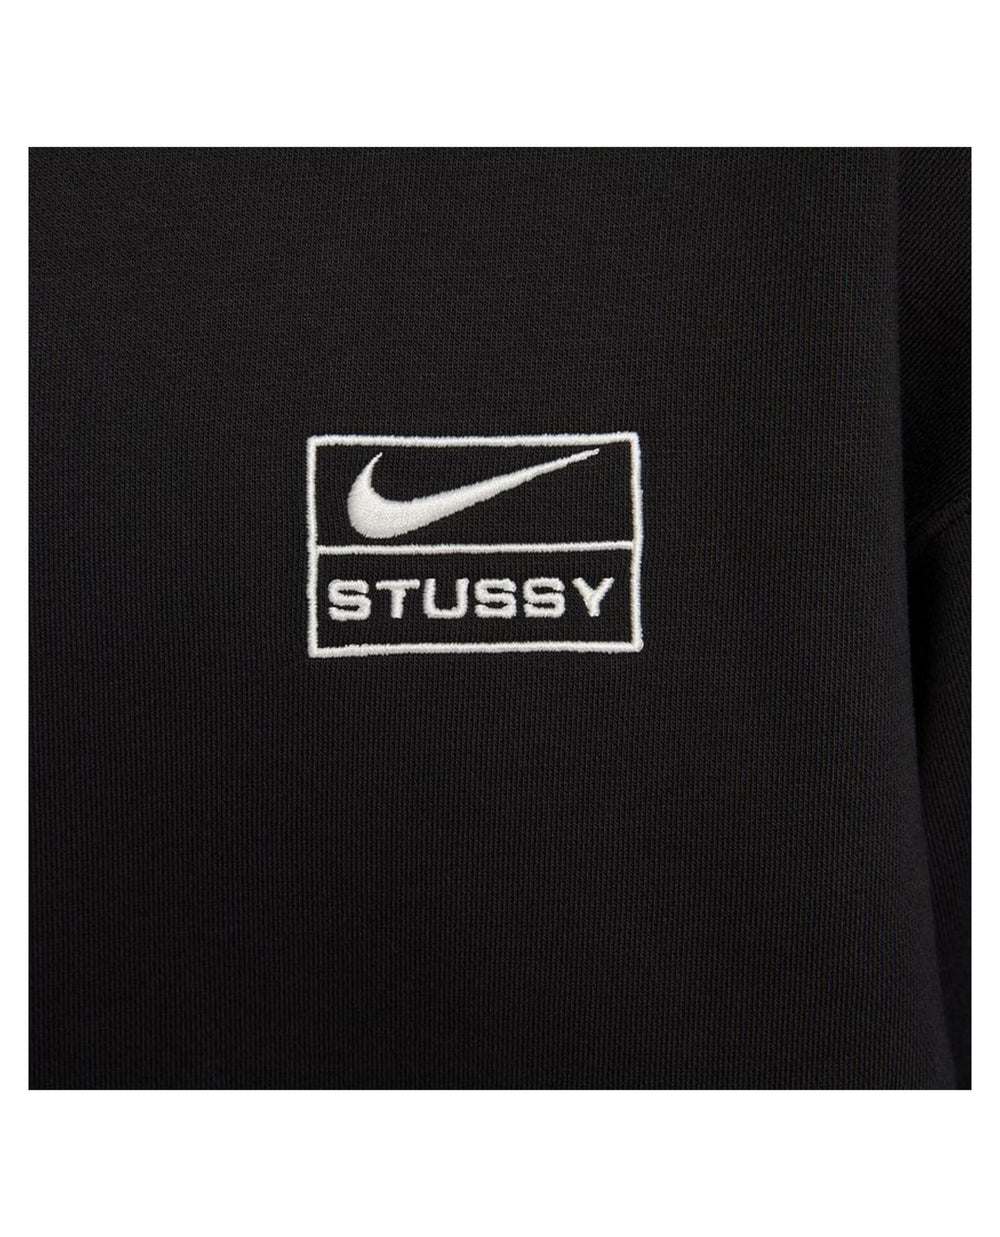 Stussy x Nike Fleece Crewneck Black | STASHED